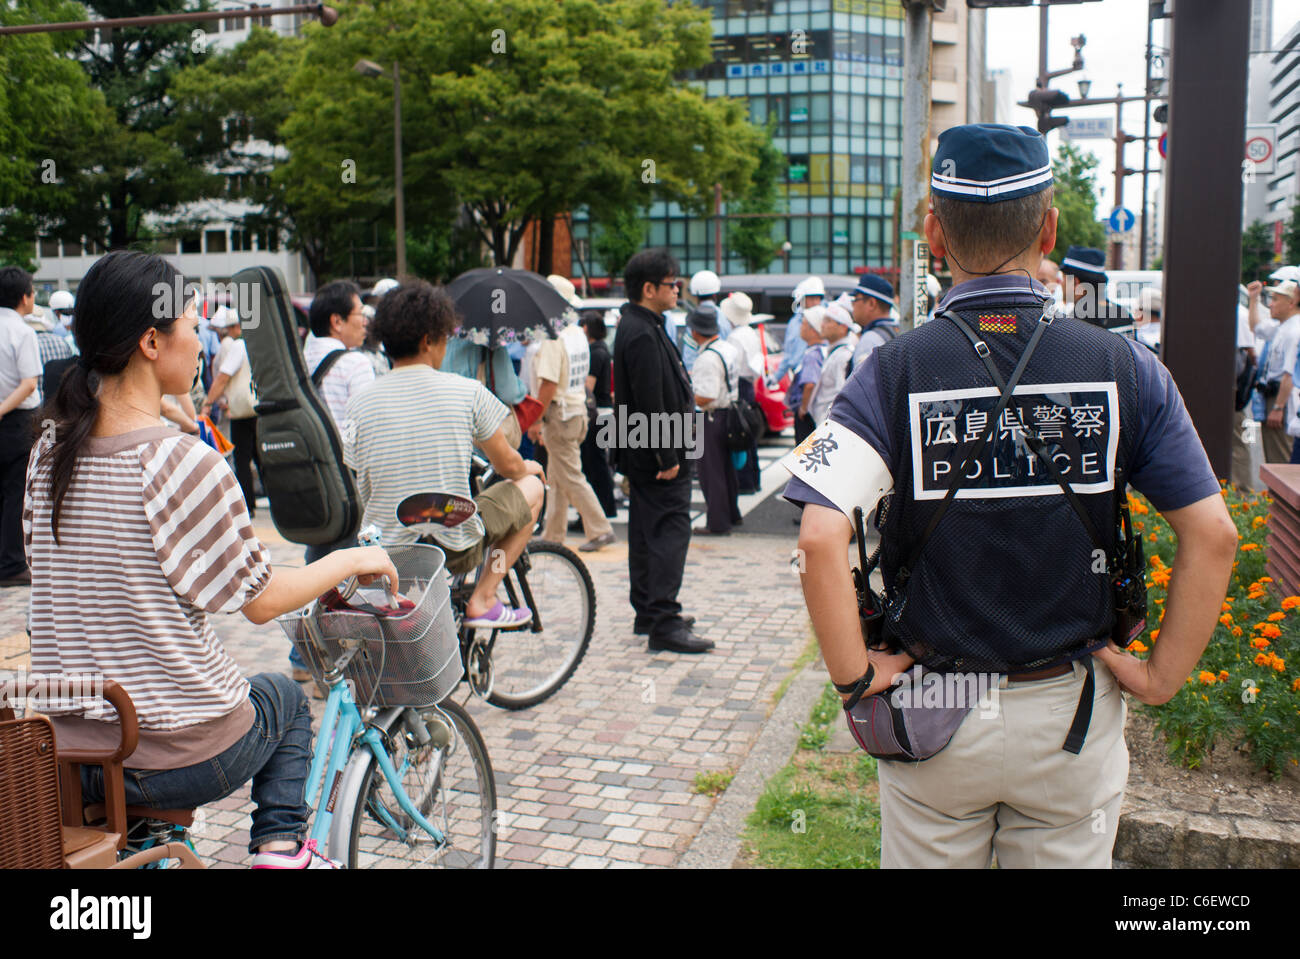 Japanese Policeman, Hiroshima Peace Ceremony, Japan Stock Photo